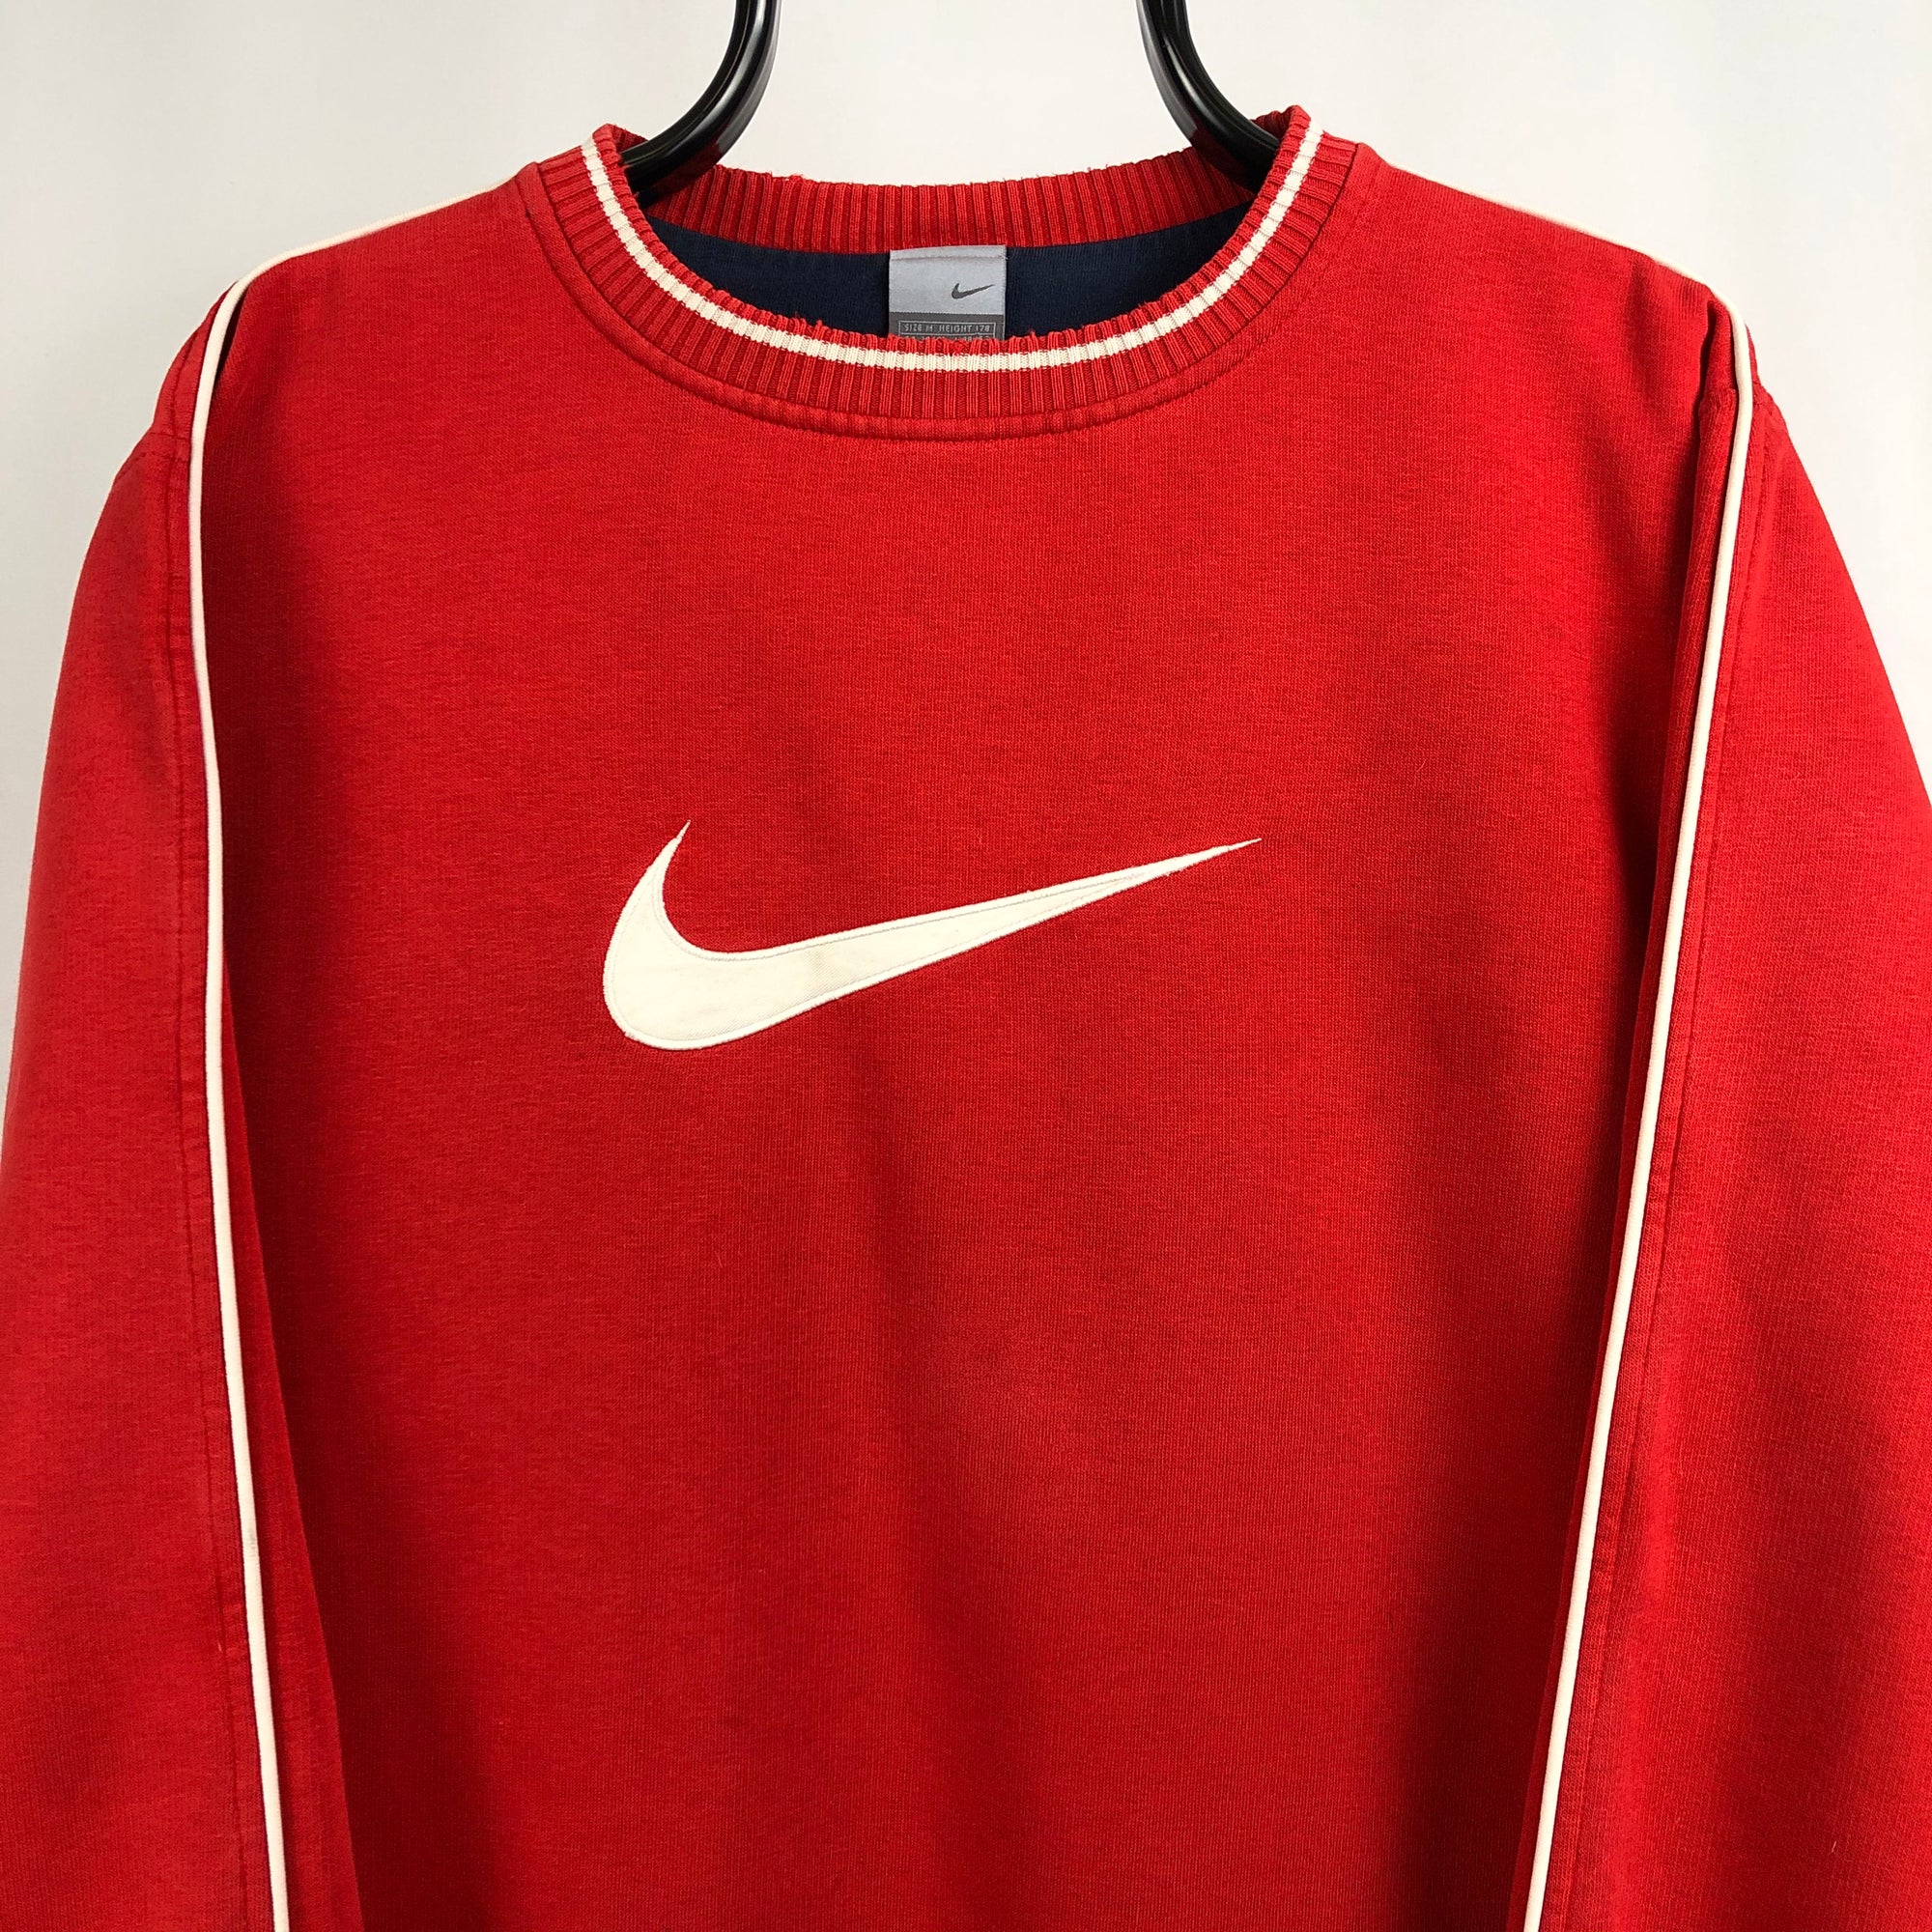 Vintage Nike Embroidered Swoosh Sweatshirt in Red/White - Men's Medium/Women's Large